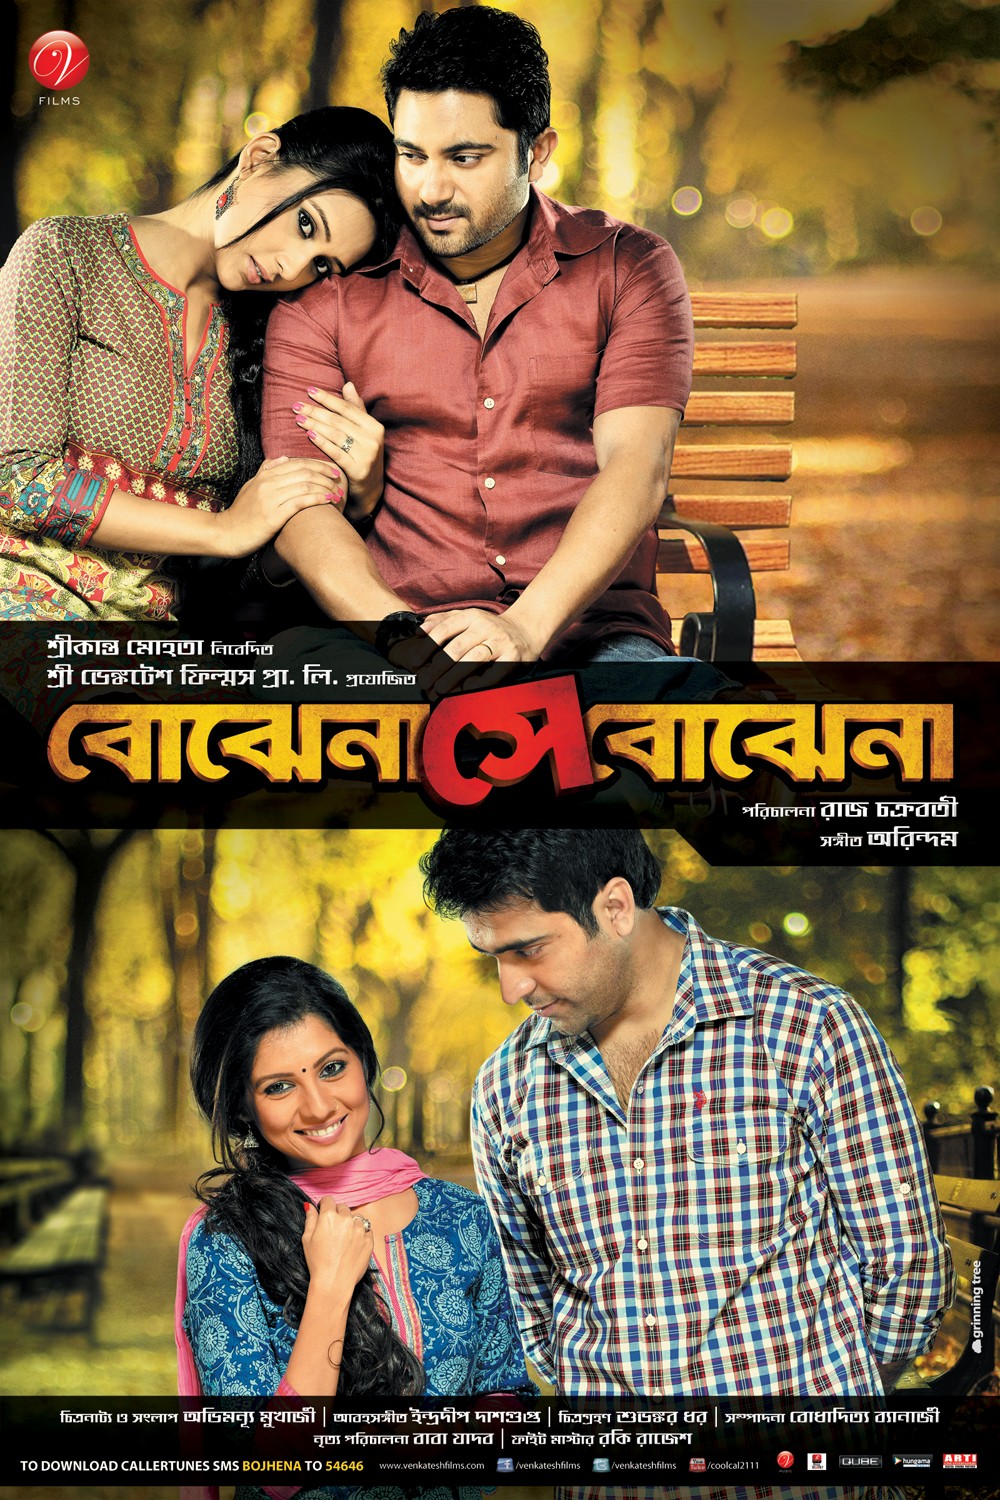 Extra Large Movie Poster Image for Bojhena Shey Bojhena (#3 of 4)